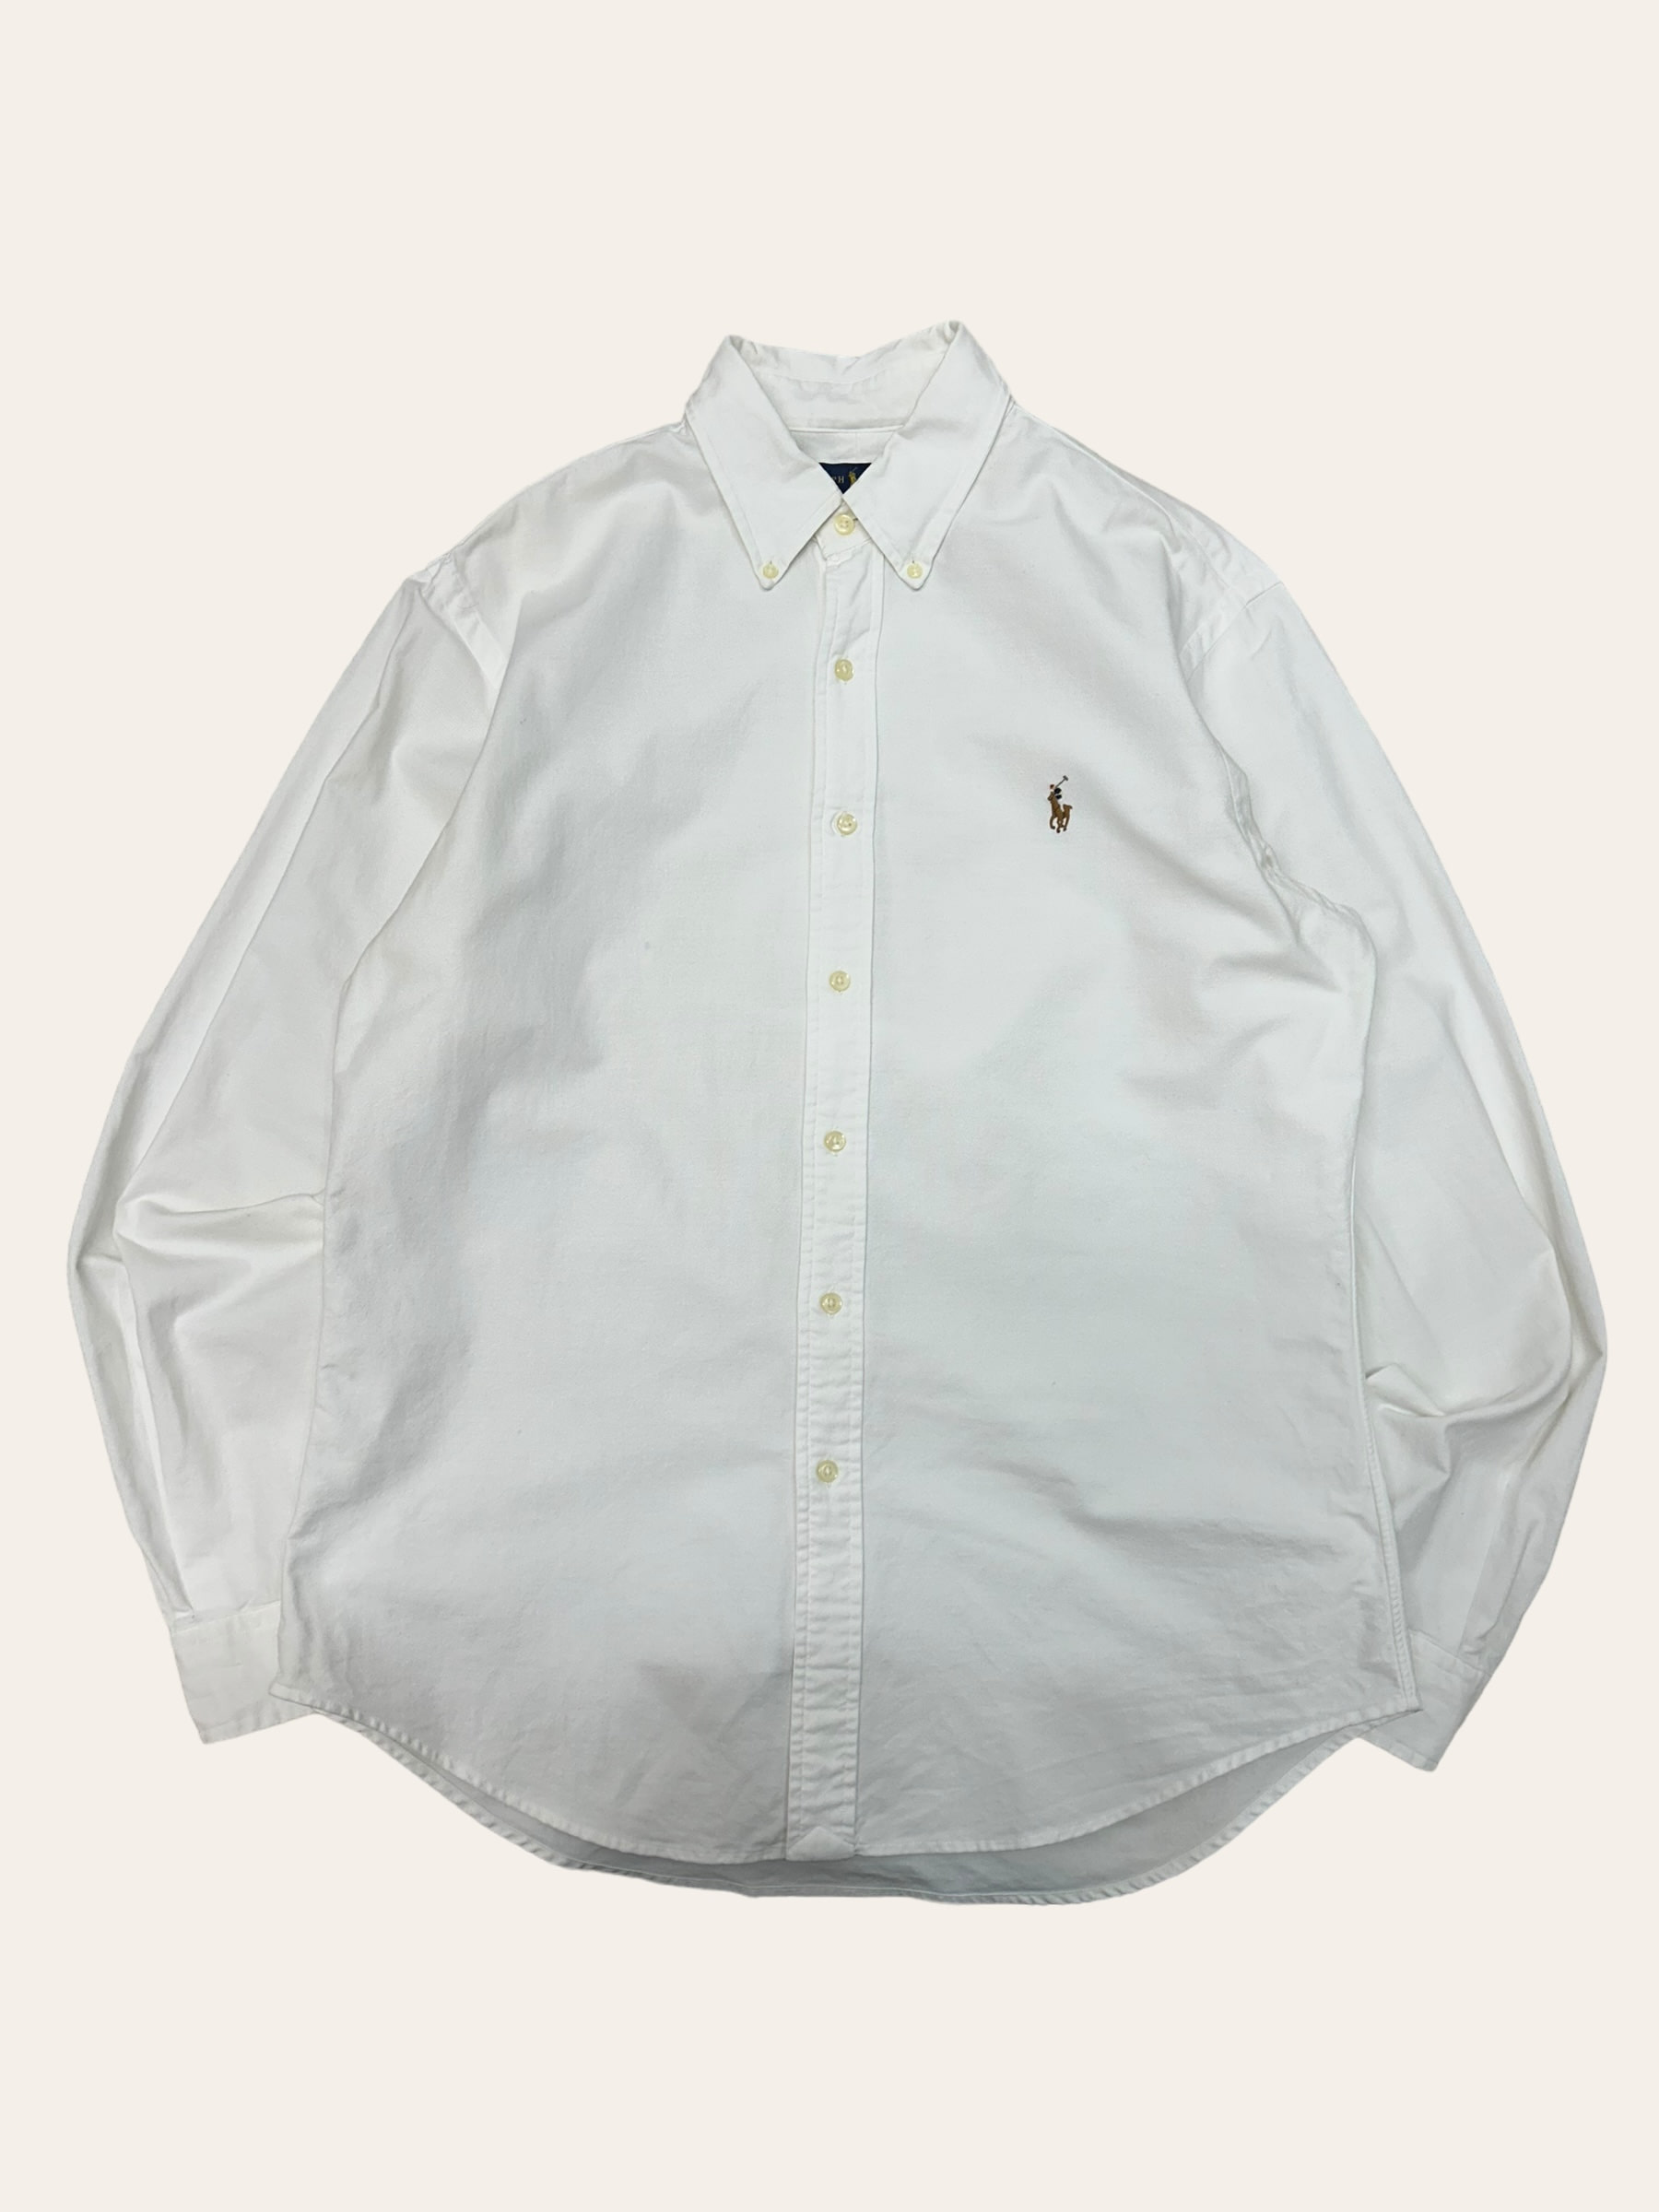 Polo ralph lauren white oxford shirt L